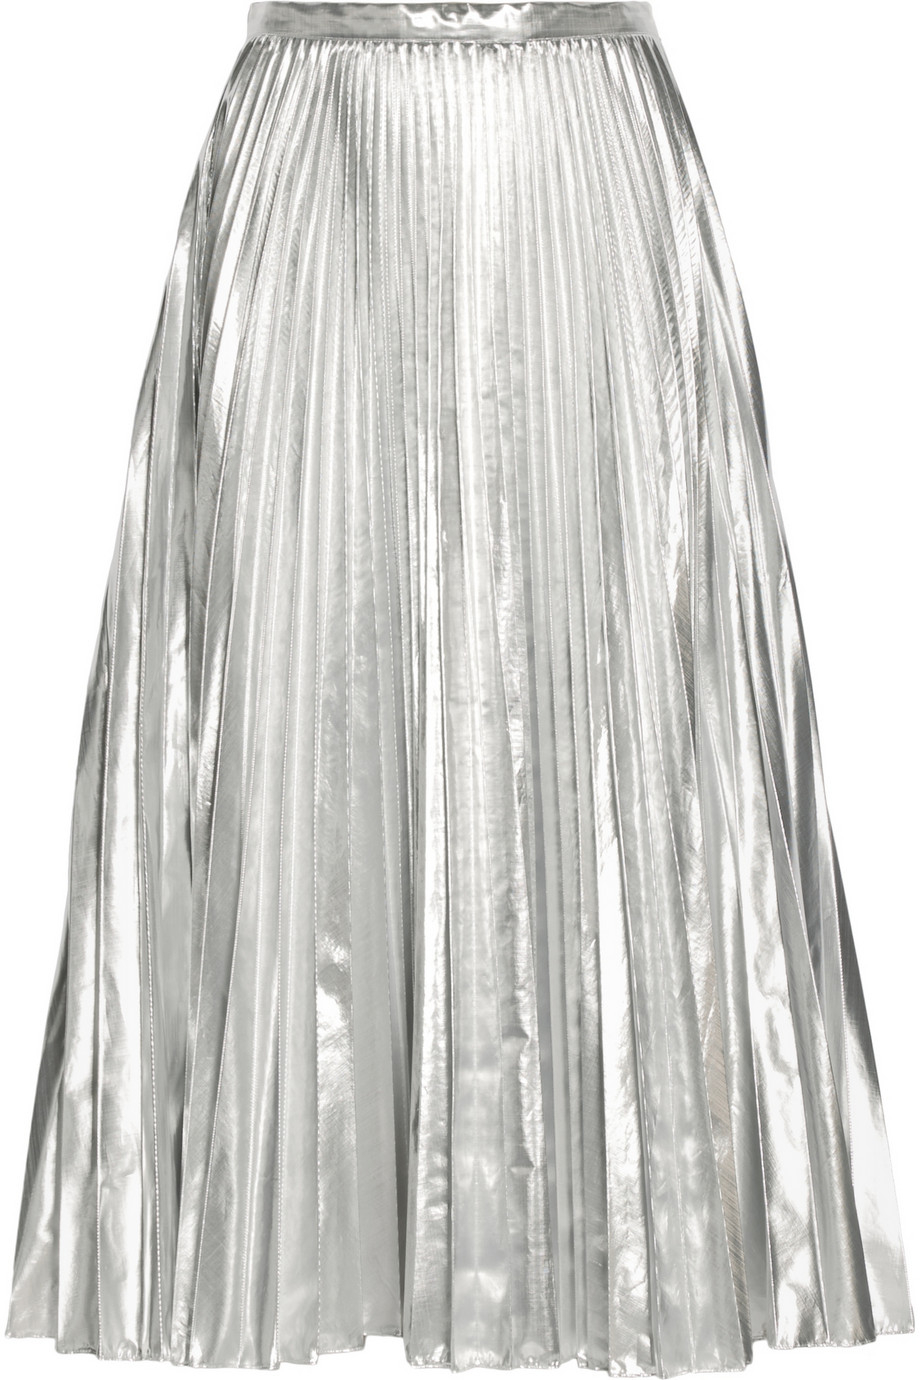 Lyst - Dkny Pleated Metallic Taffeta Midi Skirt in Metallic